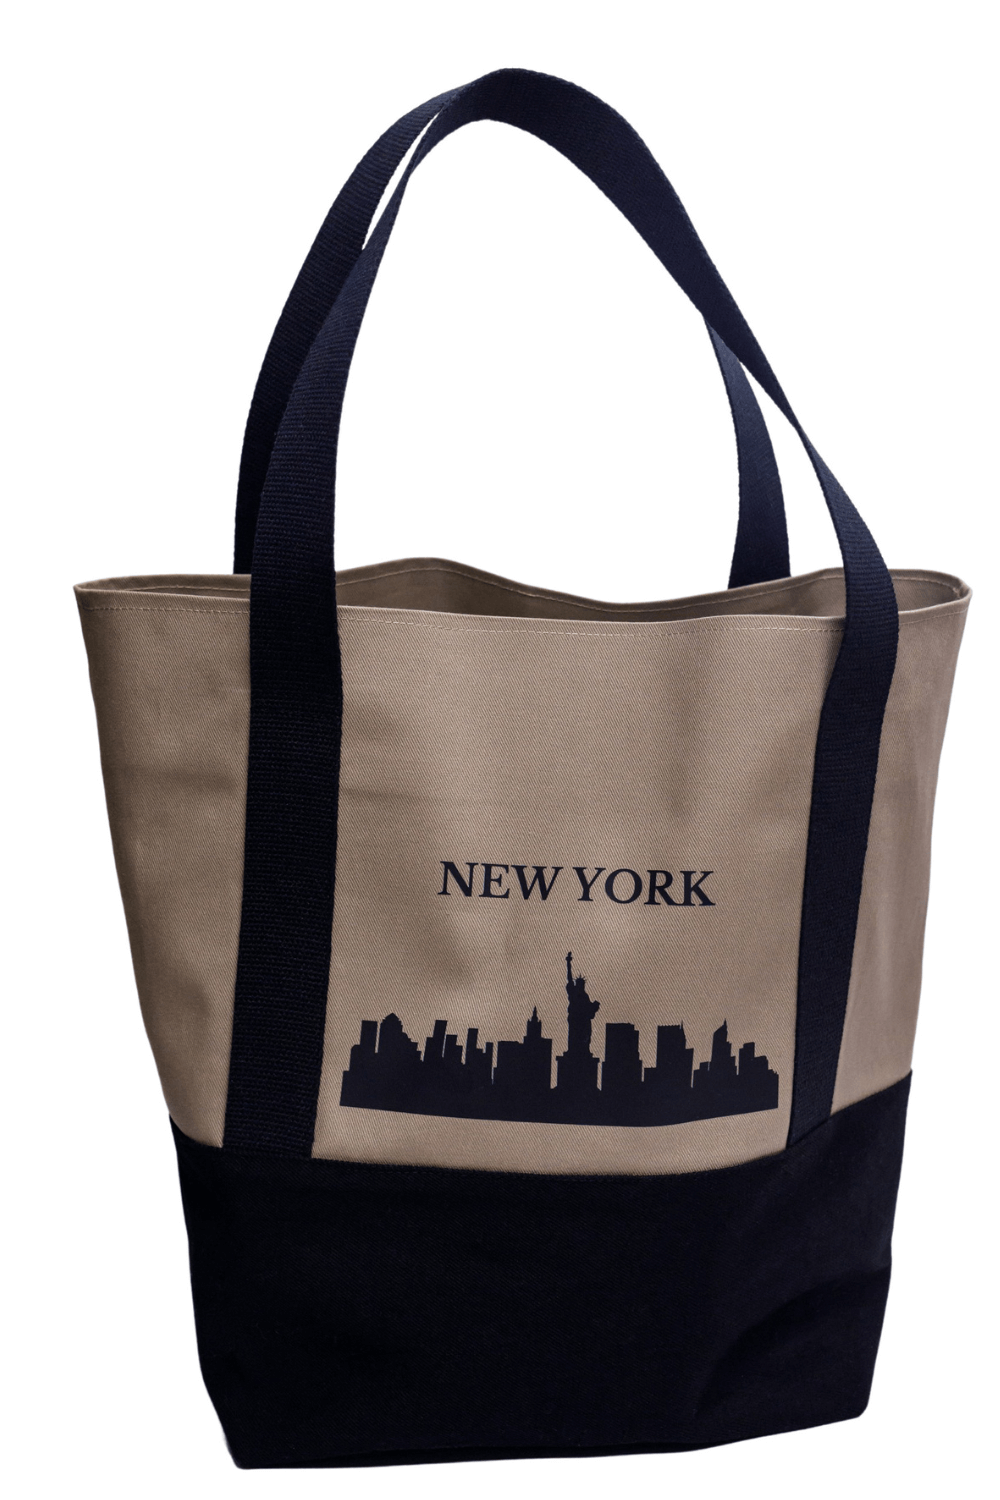 Cotton ecological shopping bag black New York 05S03